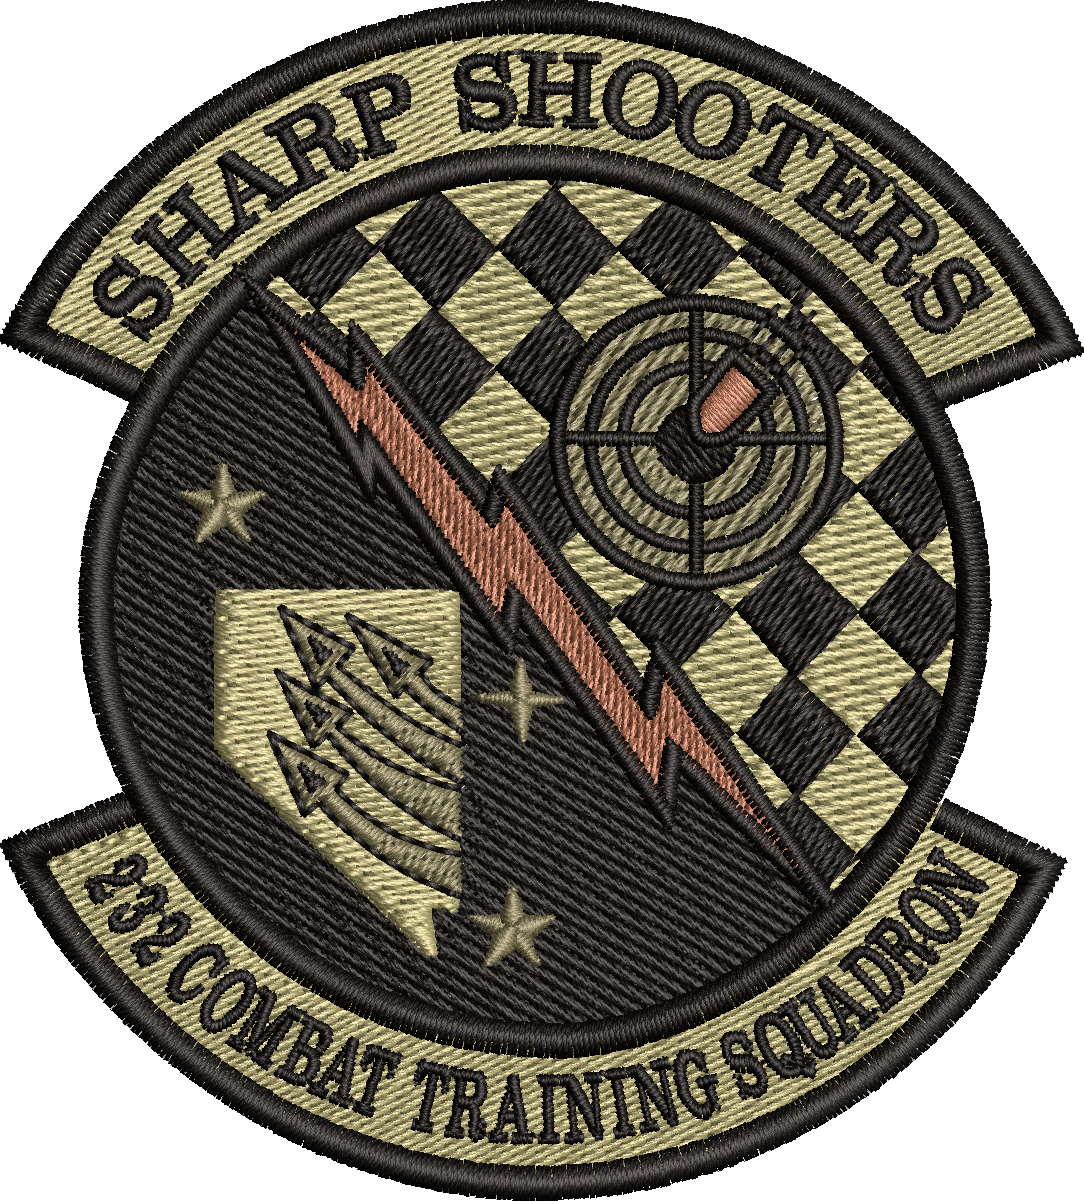 232 Combat Training Squadron - Sharp Shooters OCP